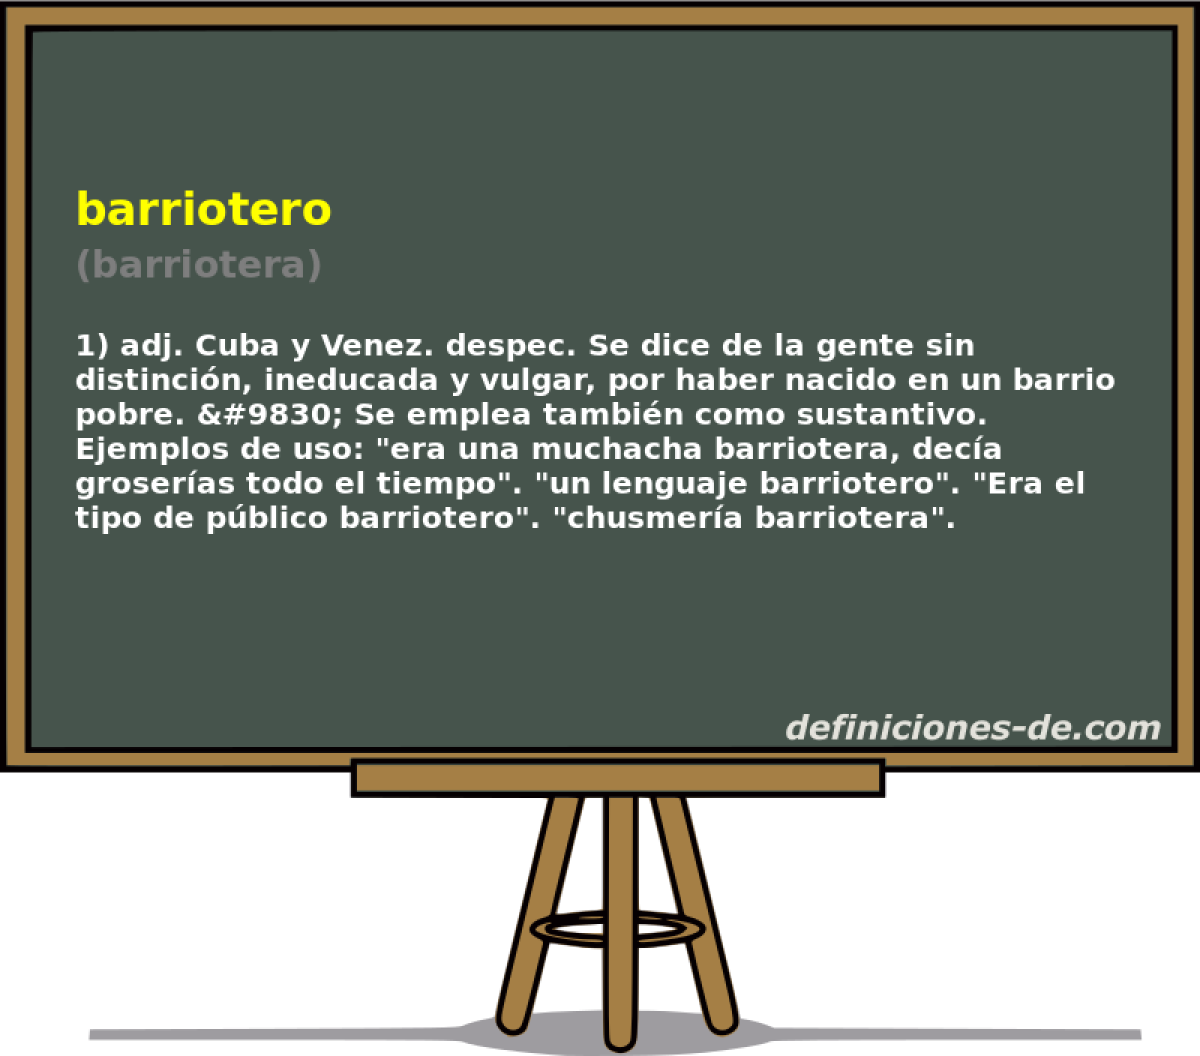 barriotero (barriotera)